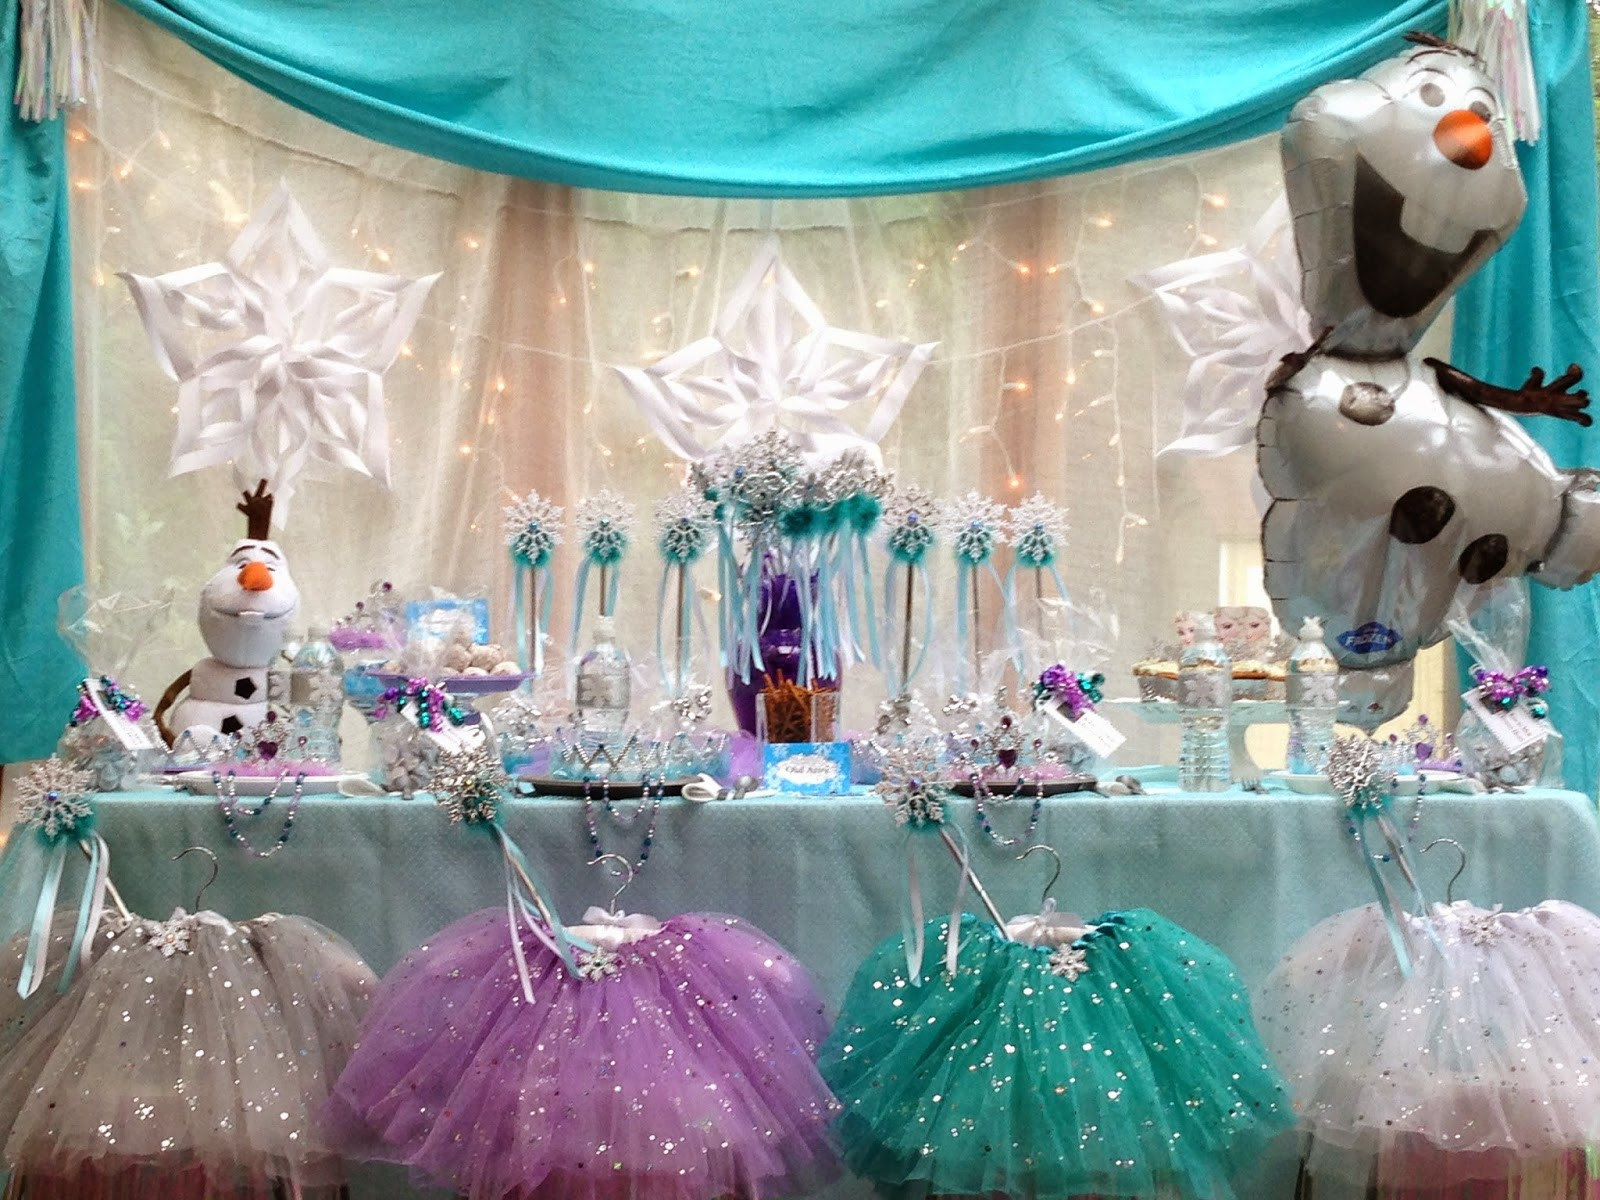 Frozen Birthday Decorations Ideas
 The Princess Birthday Blog FROZEN DIY Snowflake Decorations